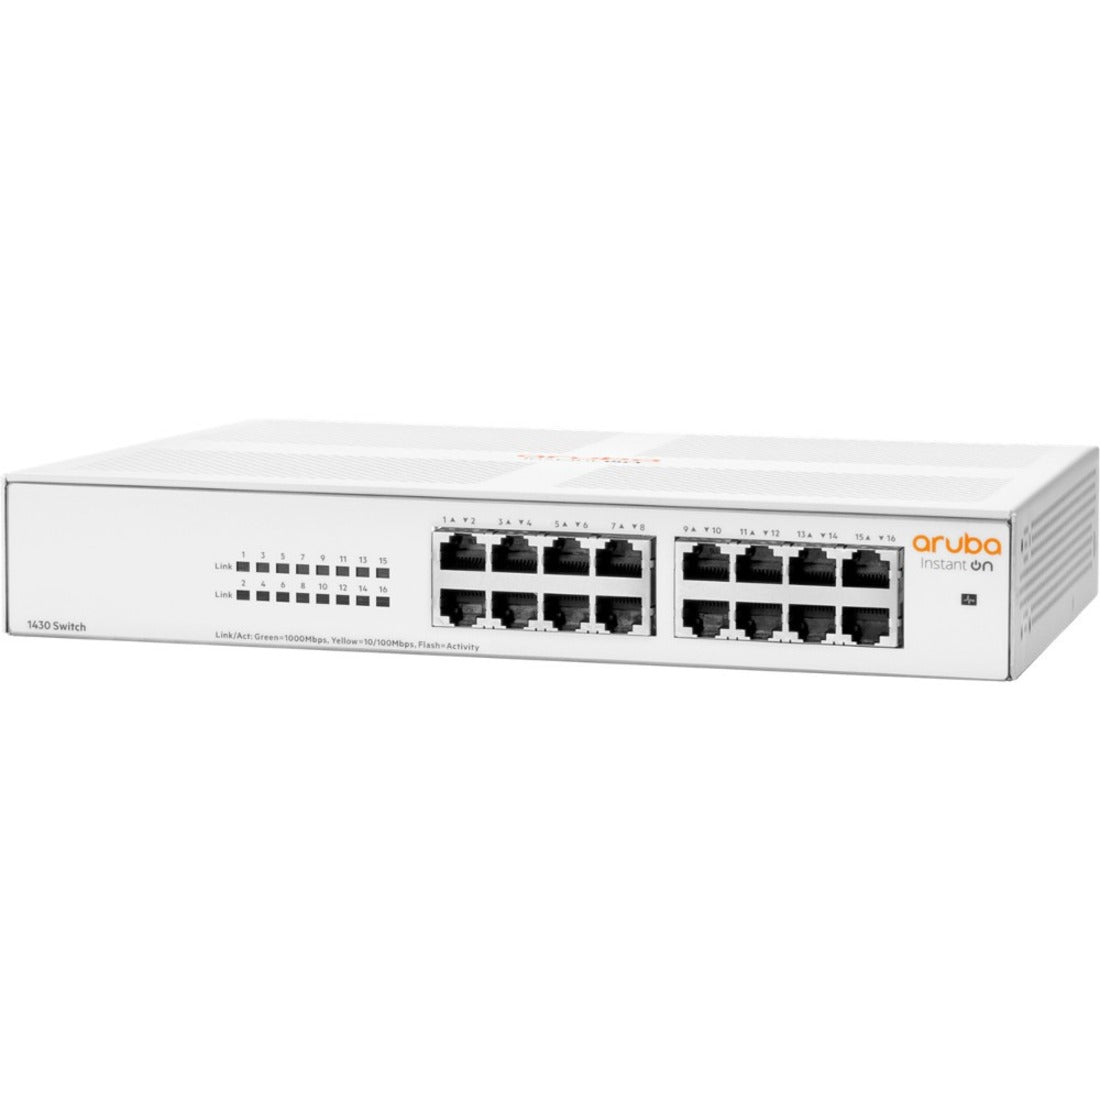 Aruba Instant On 1430 16G Switch, 16-Port Gigabit Ethernet for Business